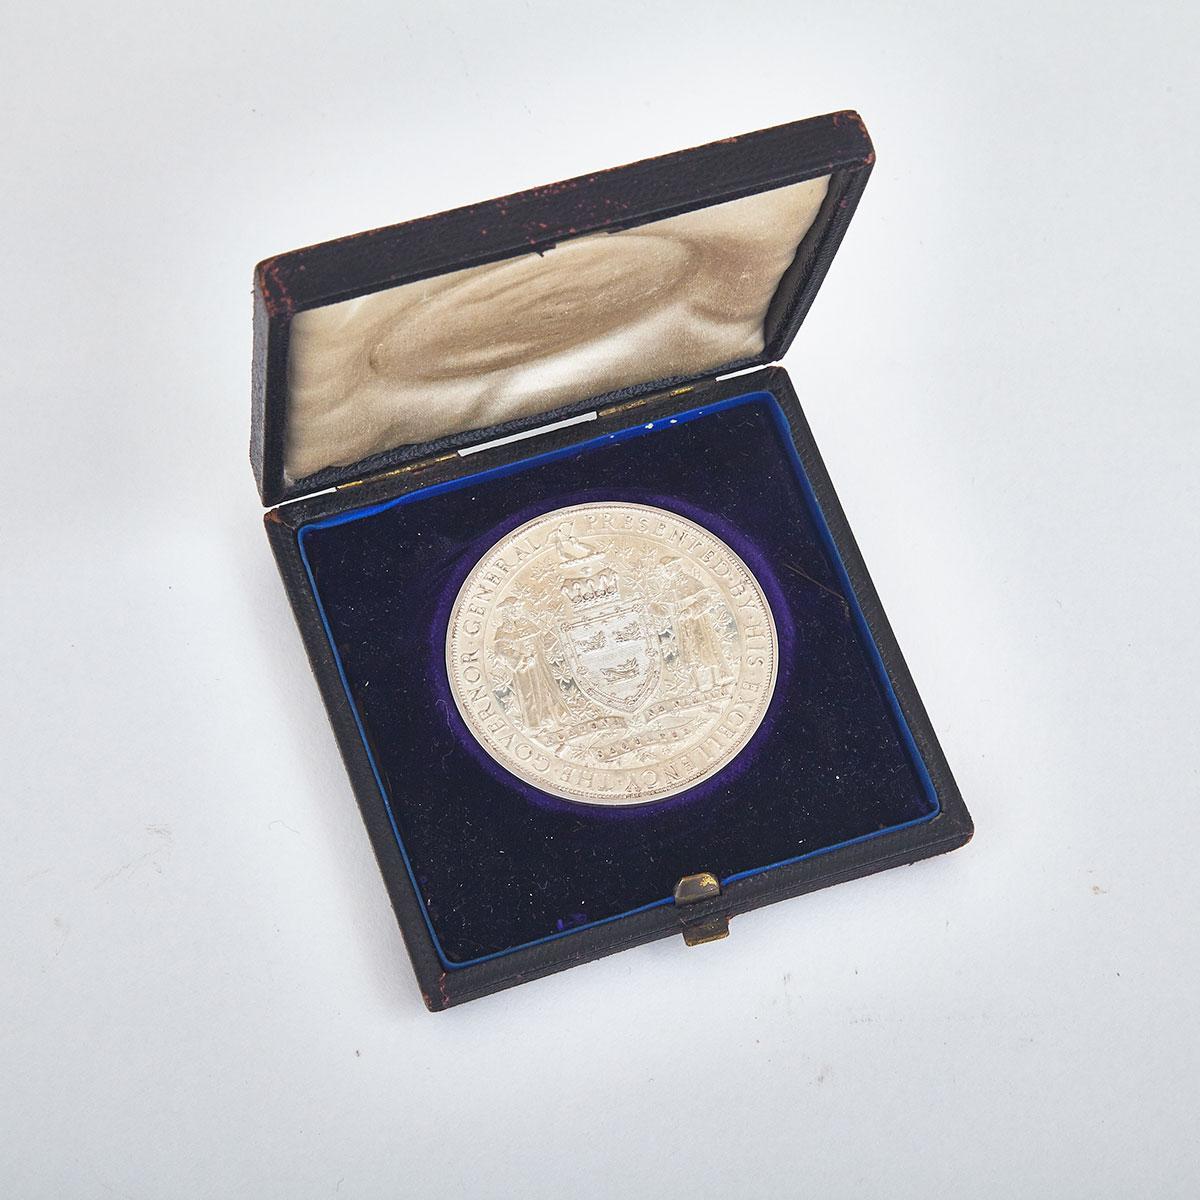 Canadian Governor General’s Award Silver Medal, 1893